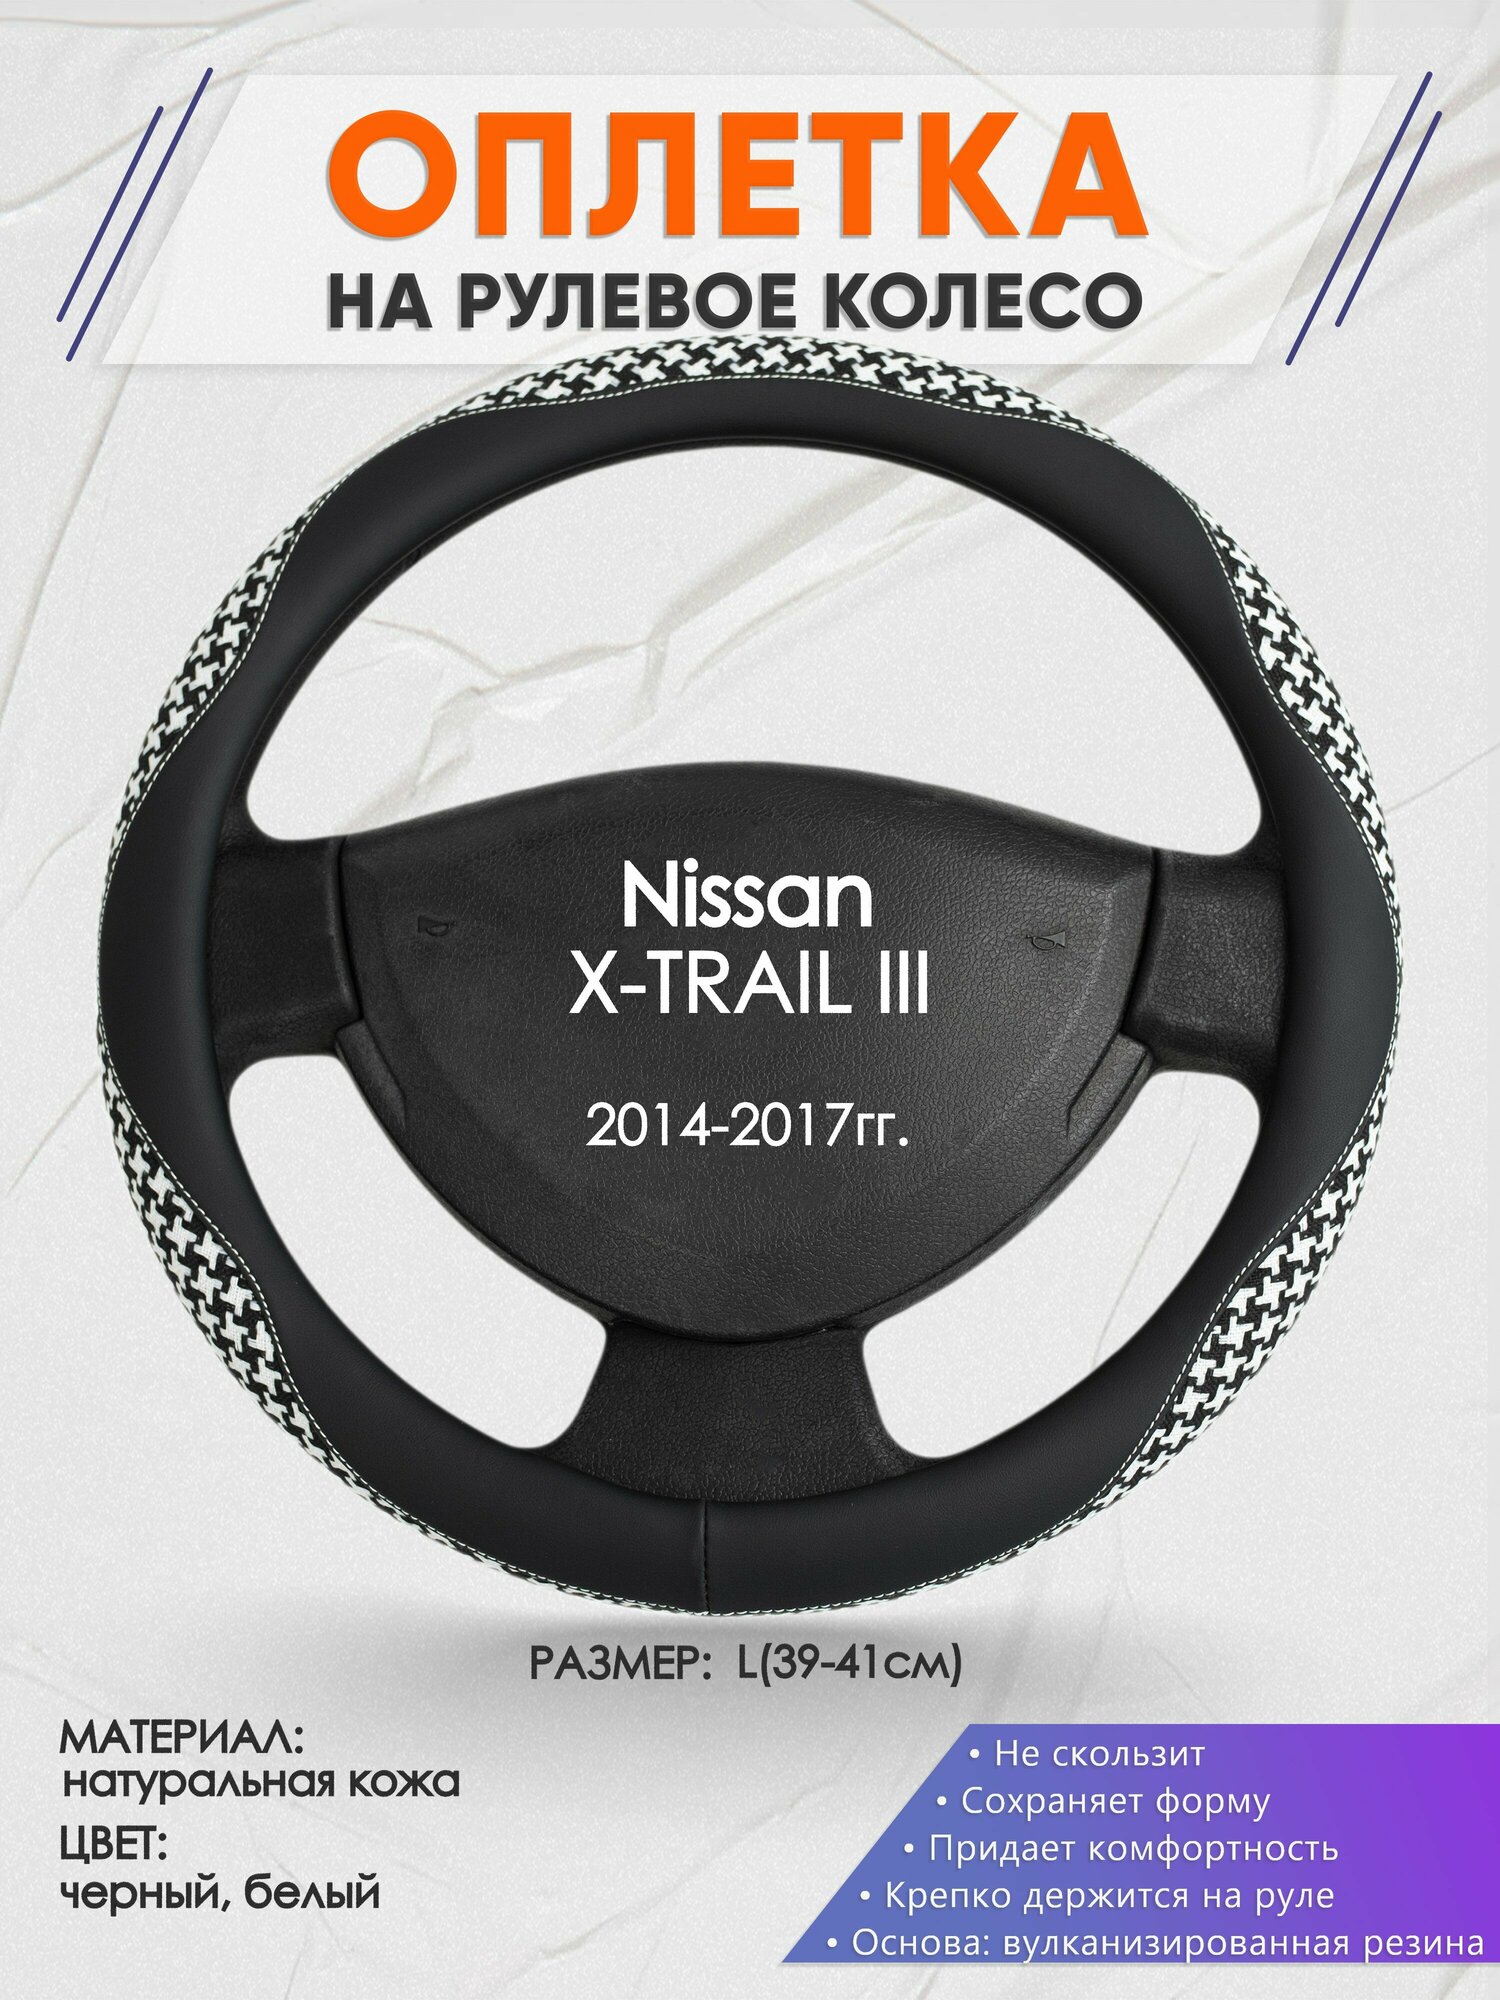 Оплетка на руль для Nissan X-TRAIL 3(Ниссан Икс Трейл) 2014-2017, L(39-41см), Натуральная кожа 21